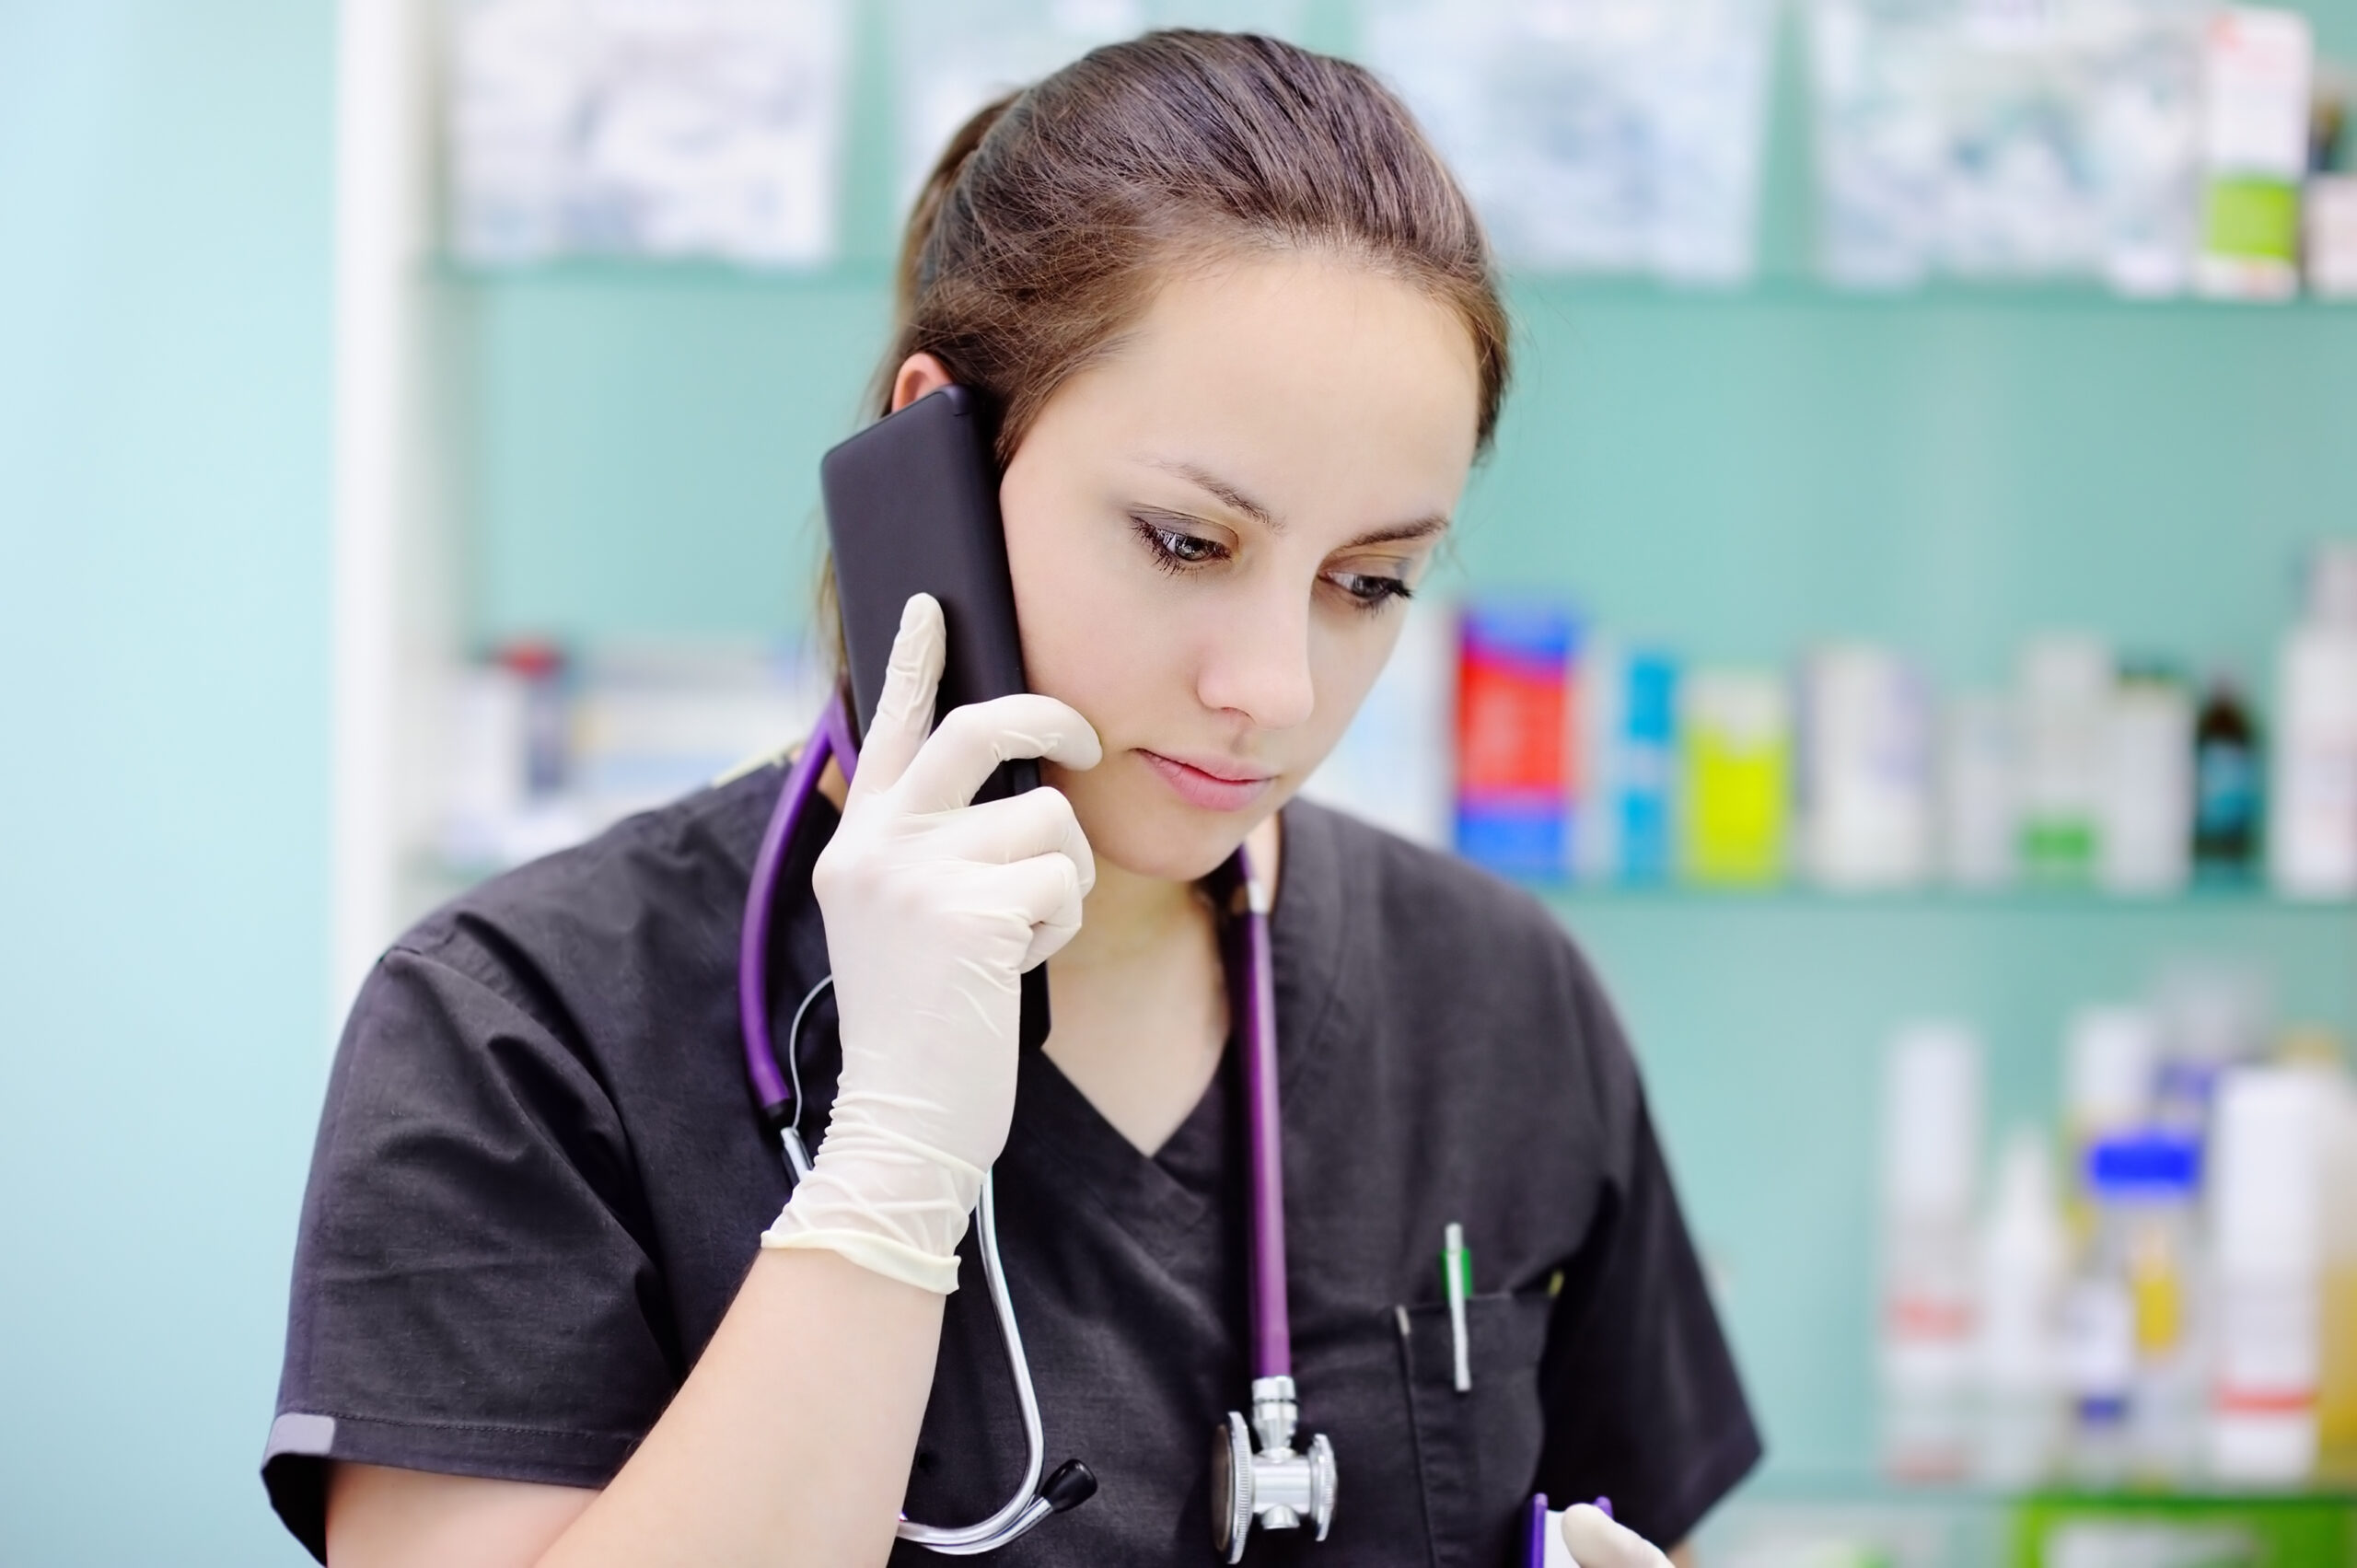 Telephone triage nurse jobs in south florida